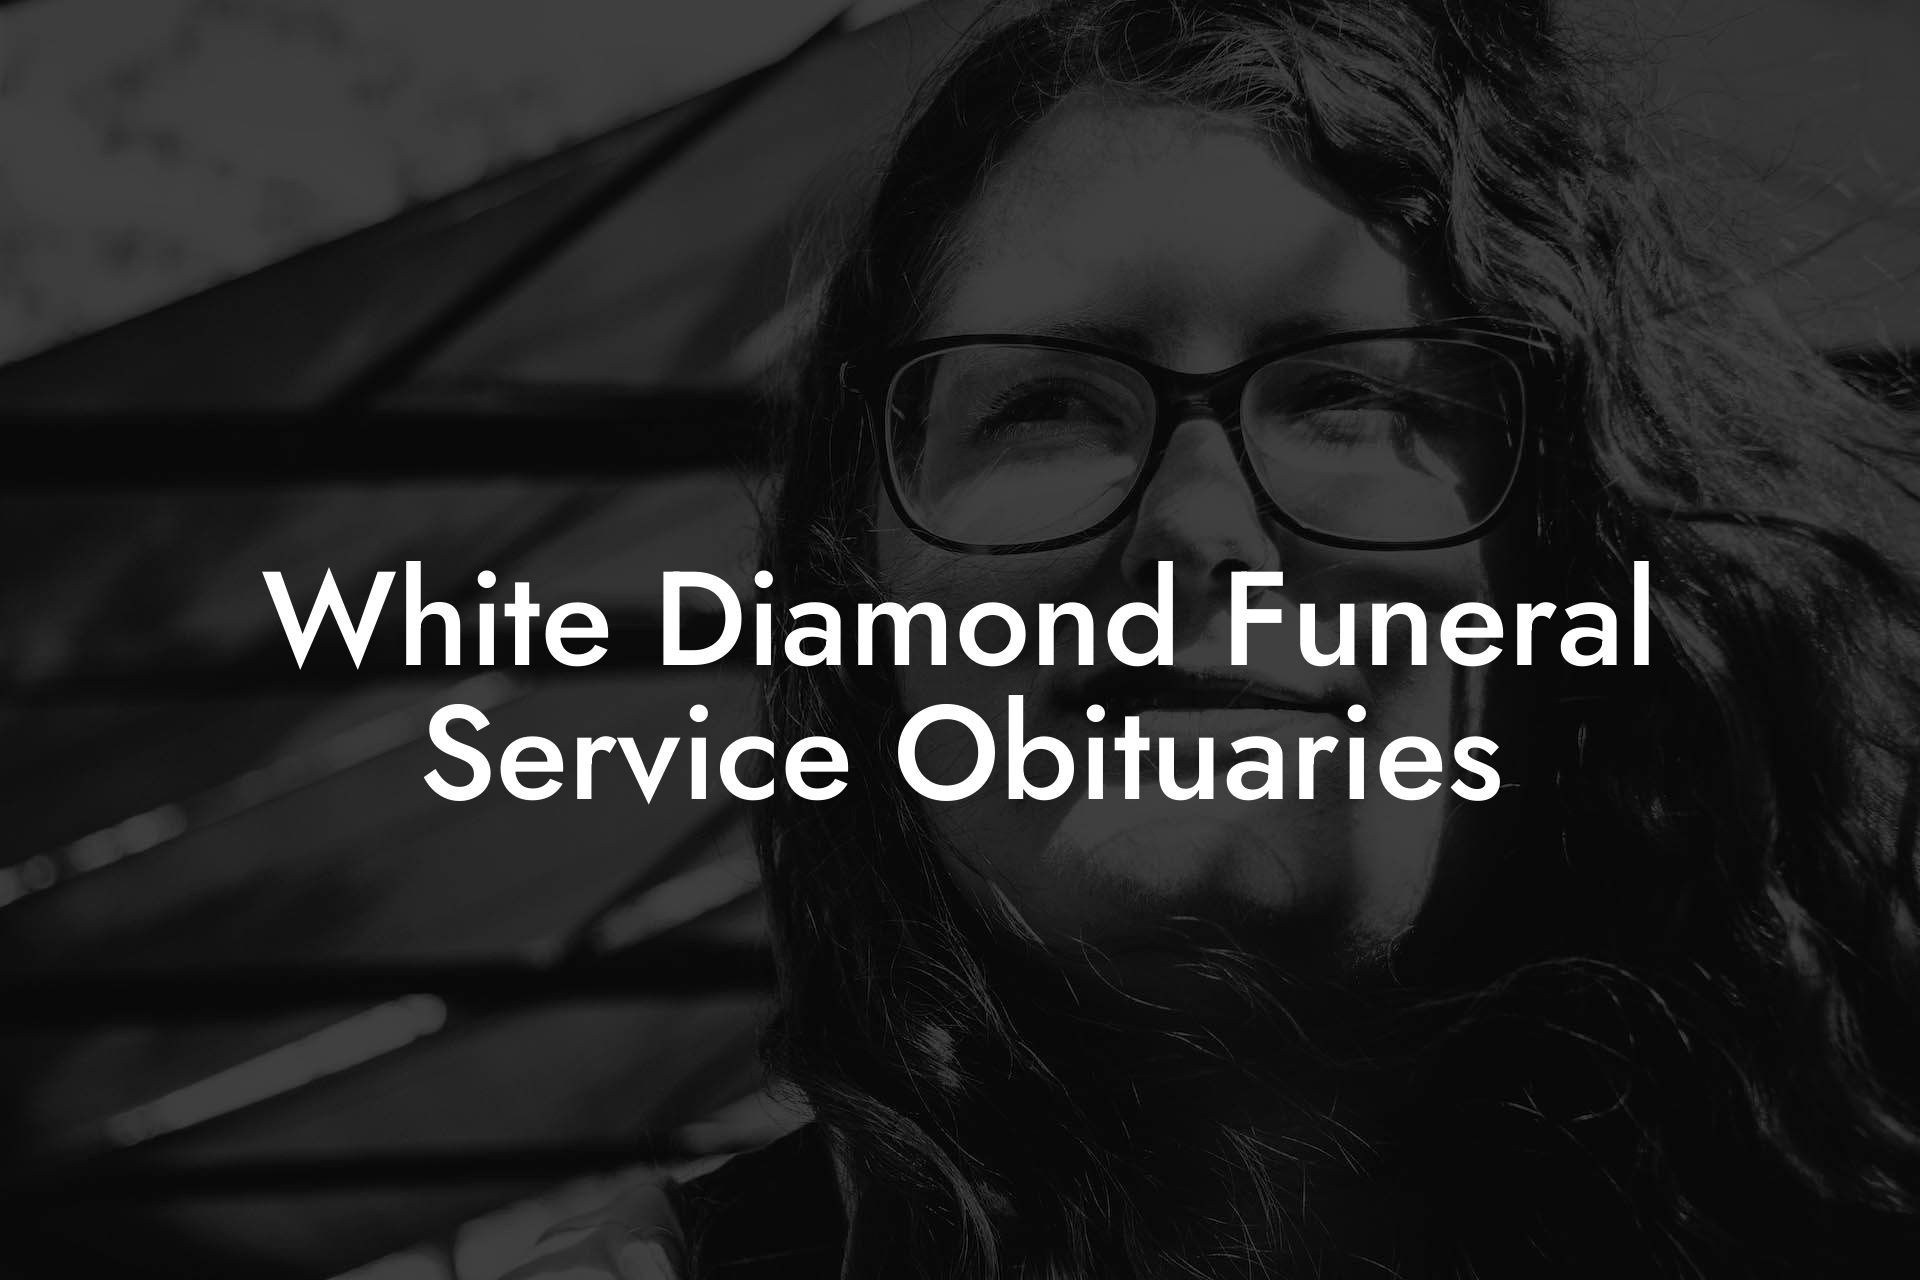 White Diamond Funeral Service Obituaries